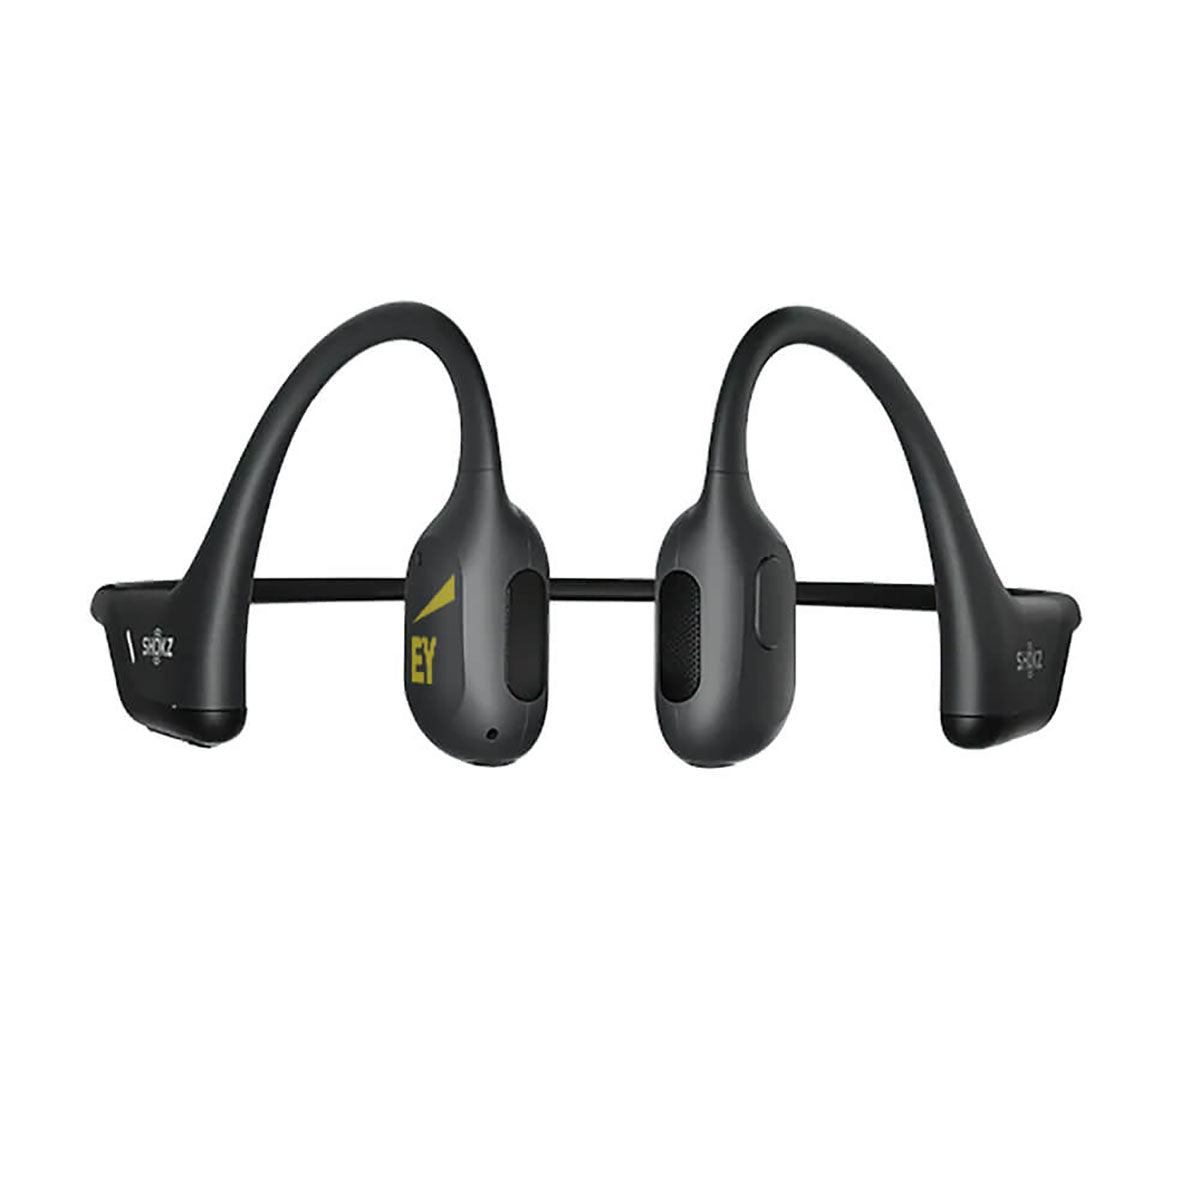 Shokz Premium Bone Conduction Open Ear Sport Headphones, Black